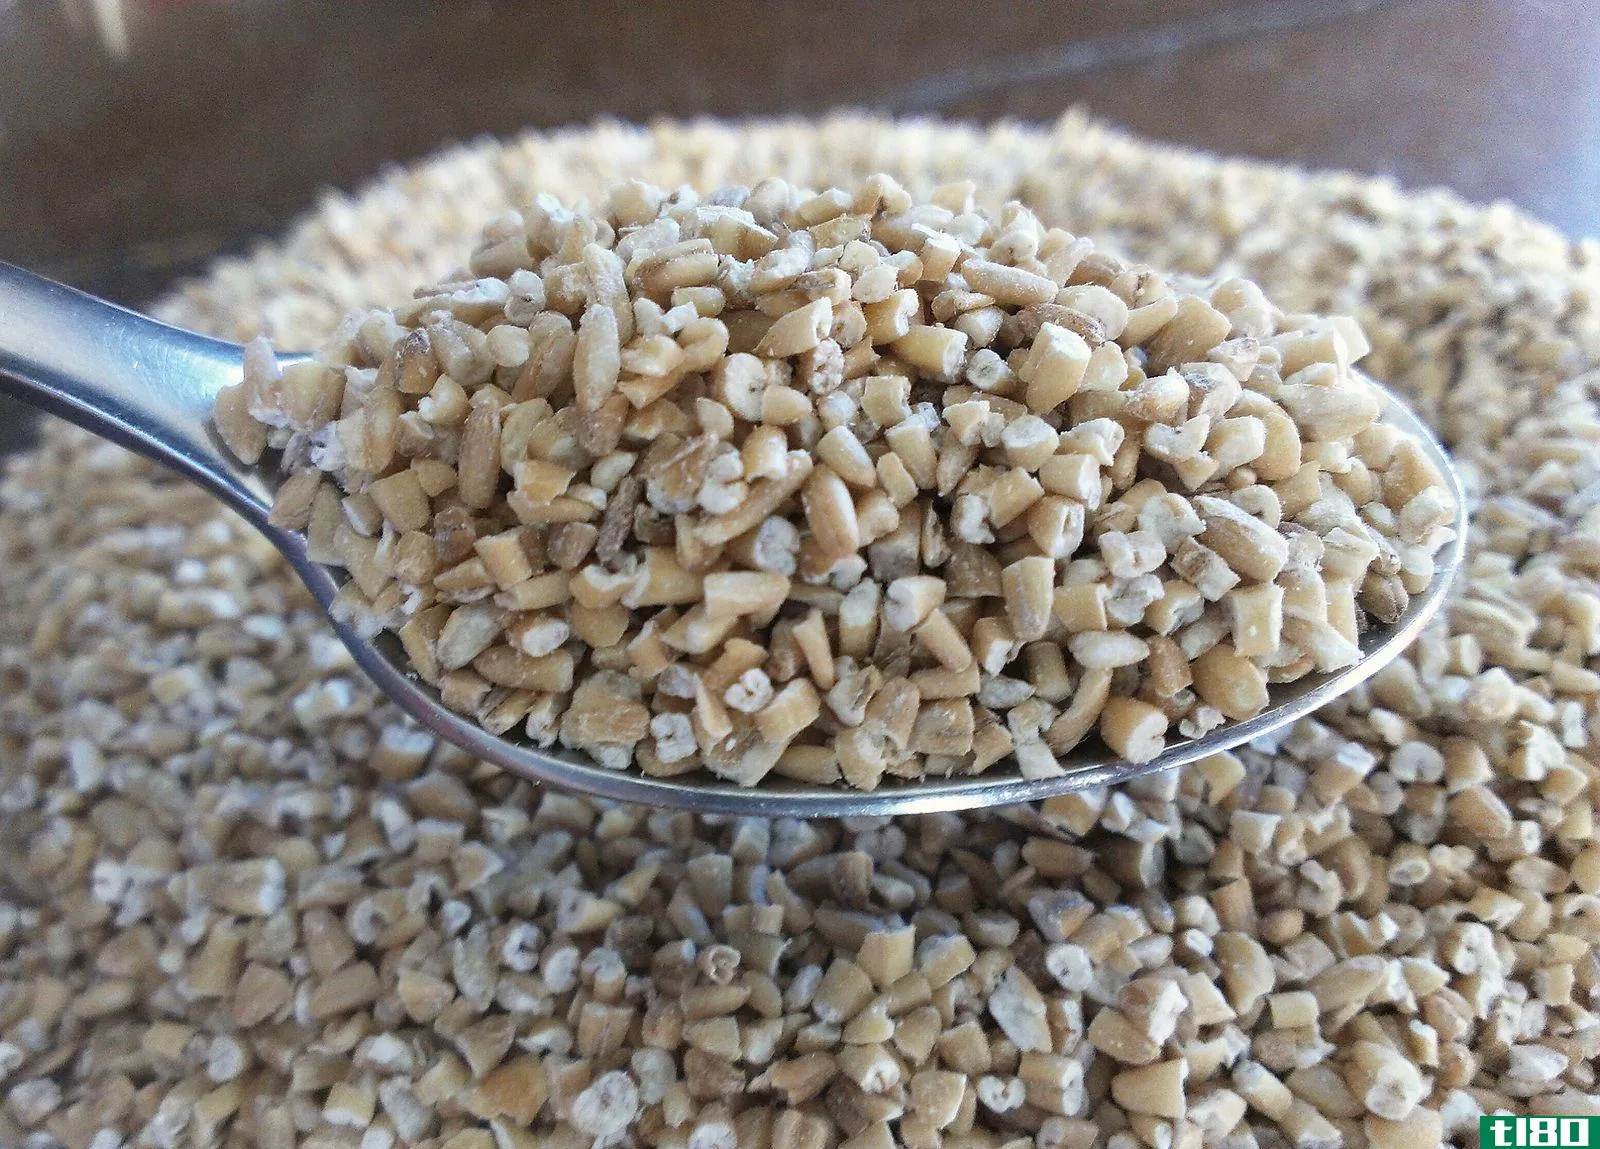 钢切燕麦(steel cut oats)和燕麦卷(rolled oats)的区别